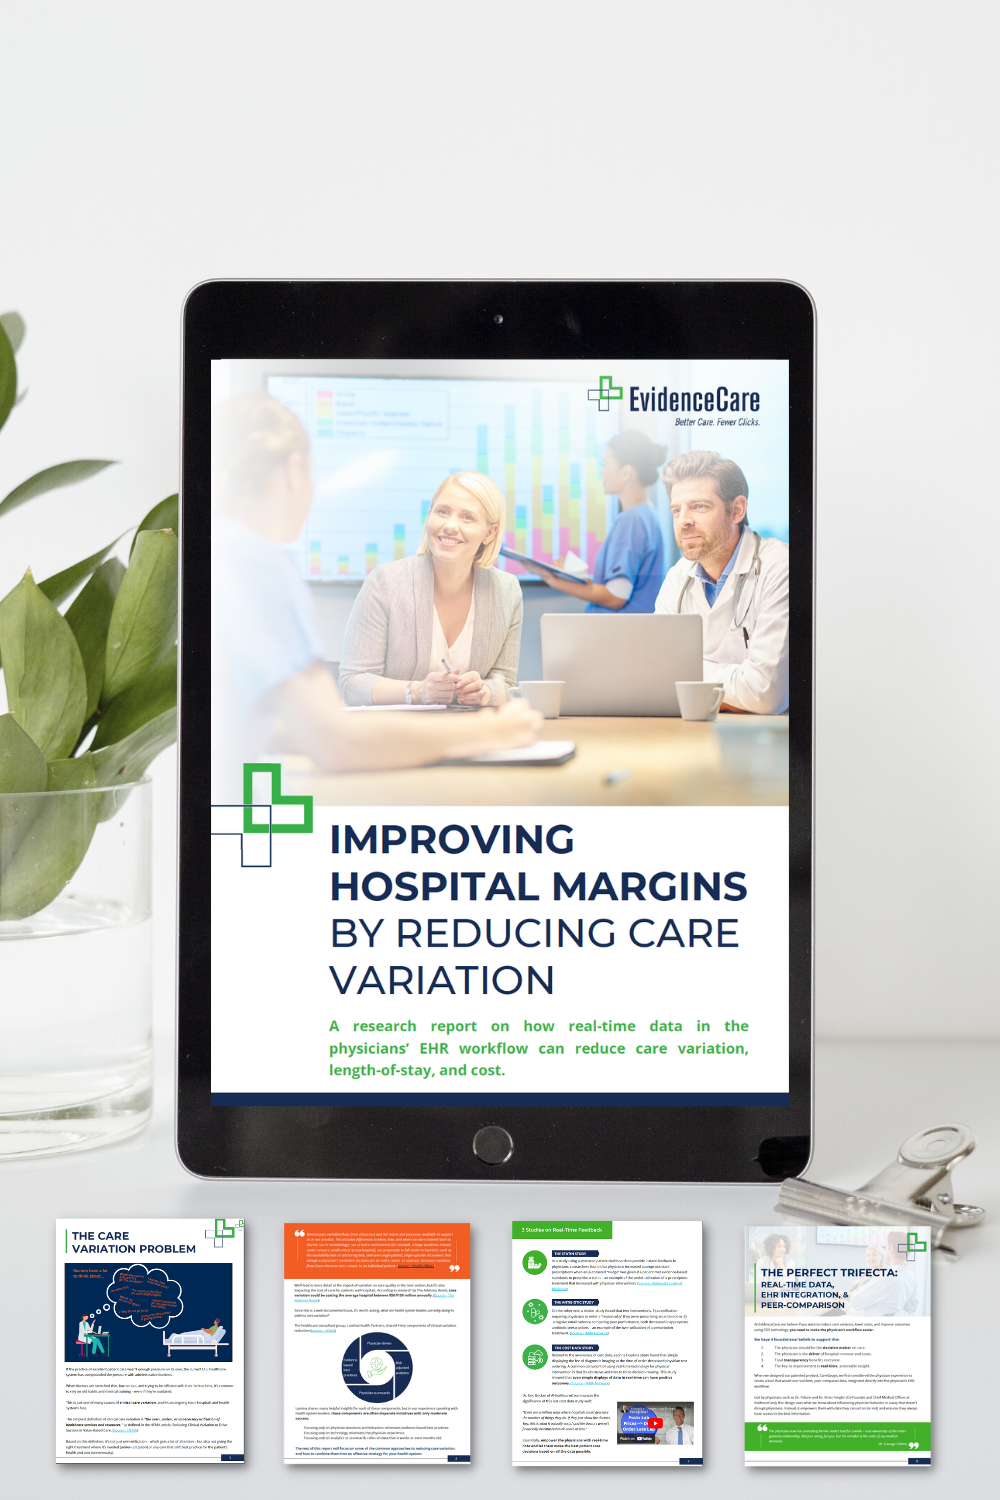 Improve Hospital Margins by Reducing Care Variation